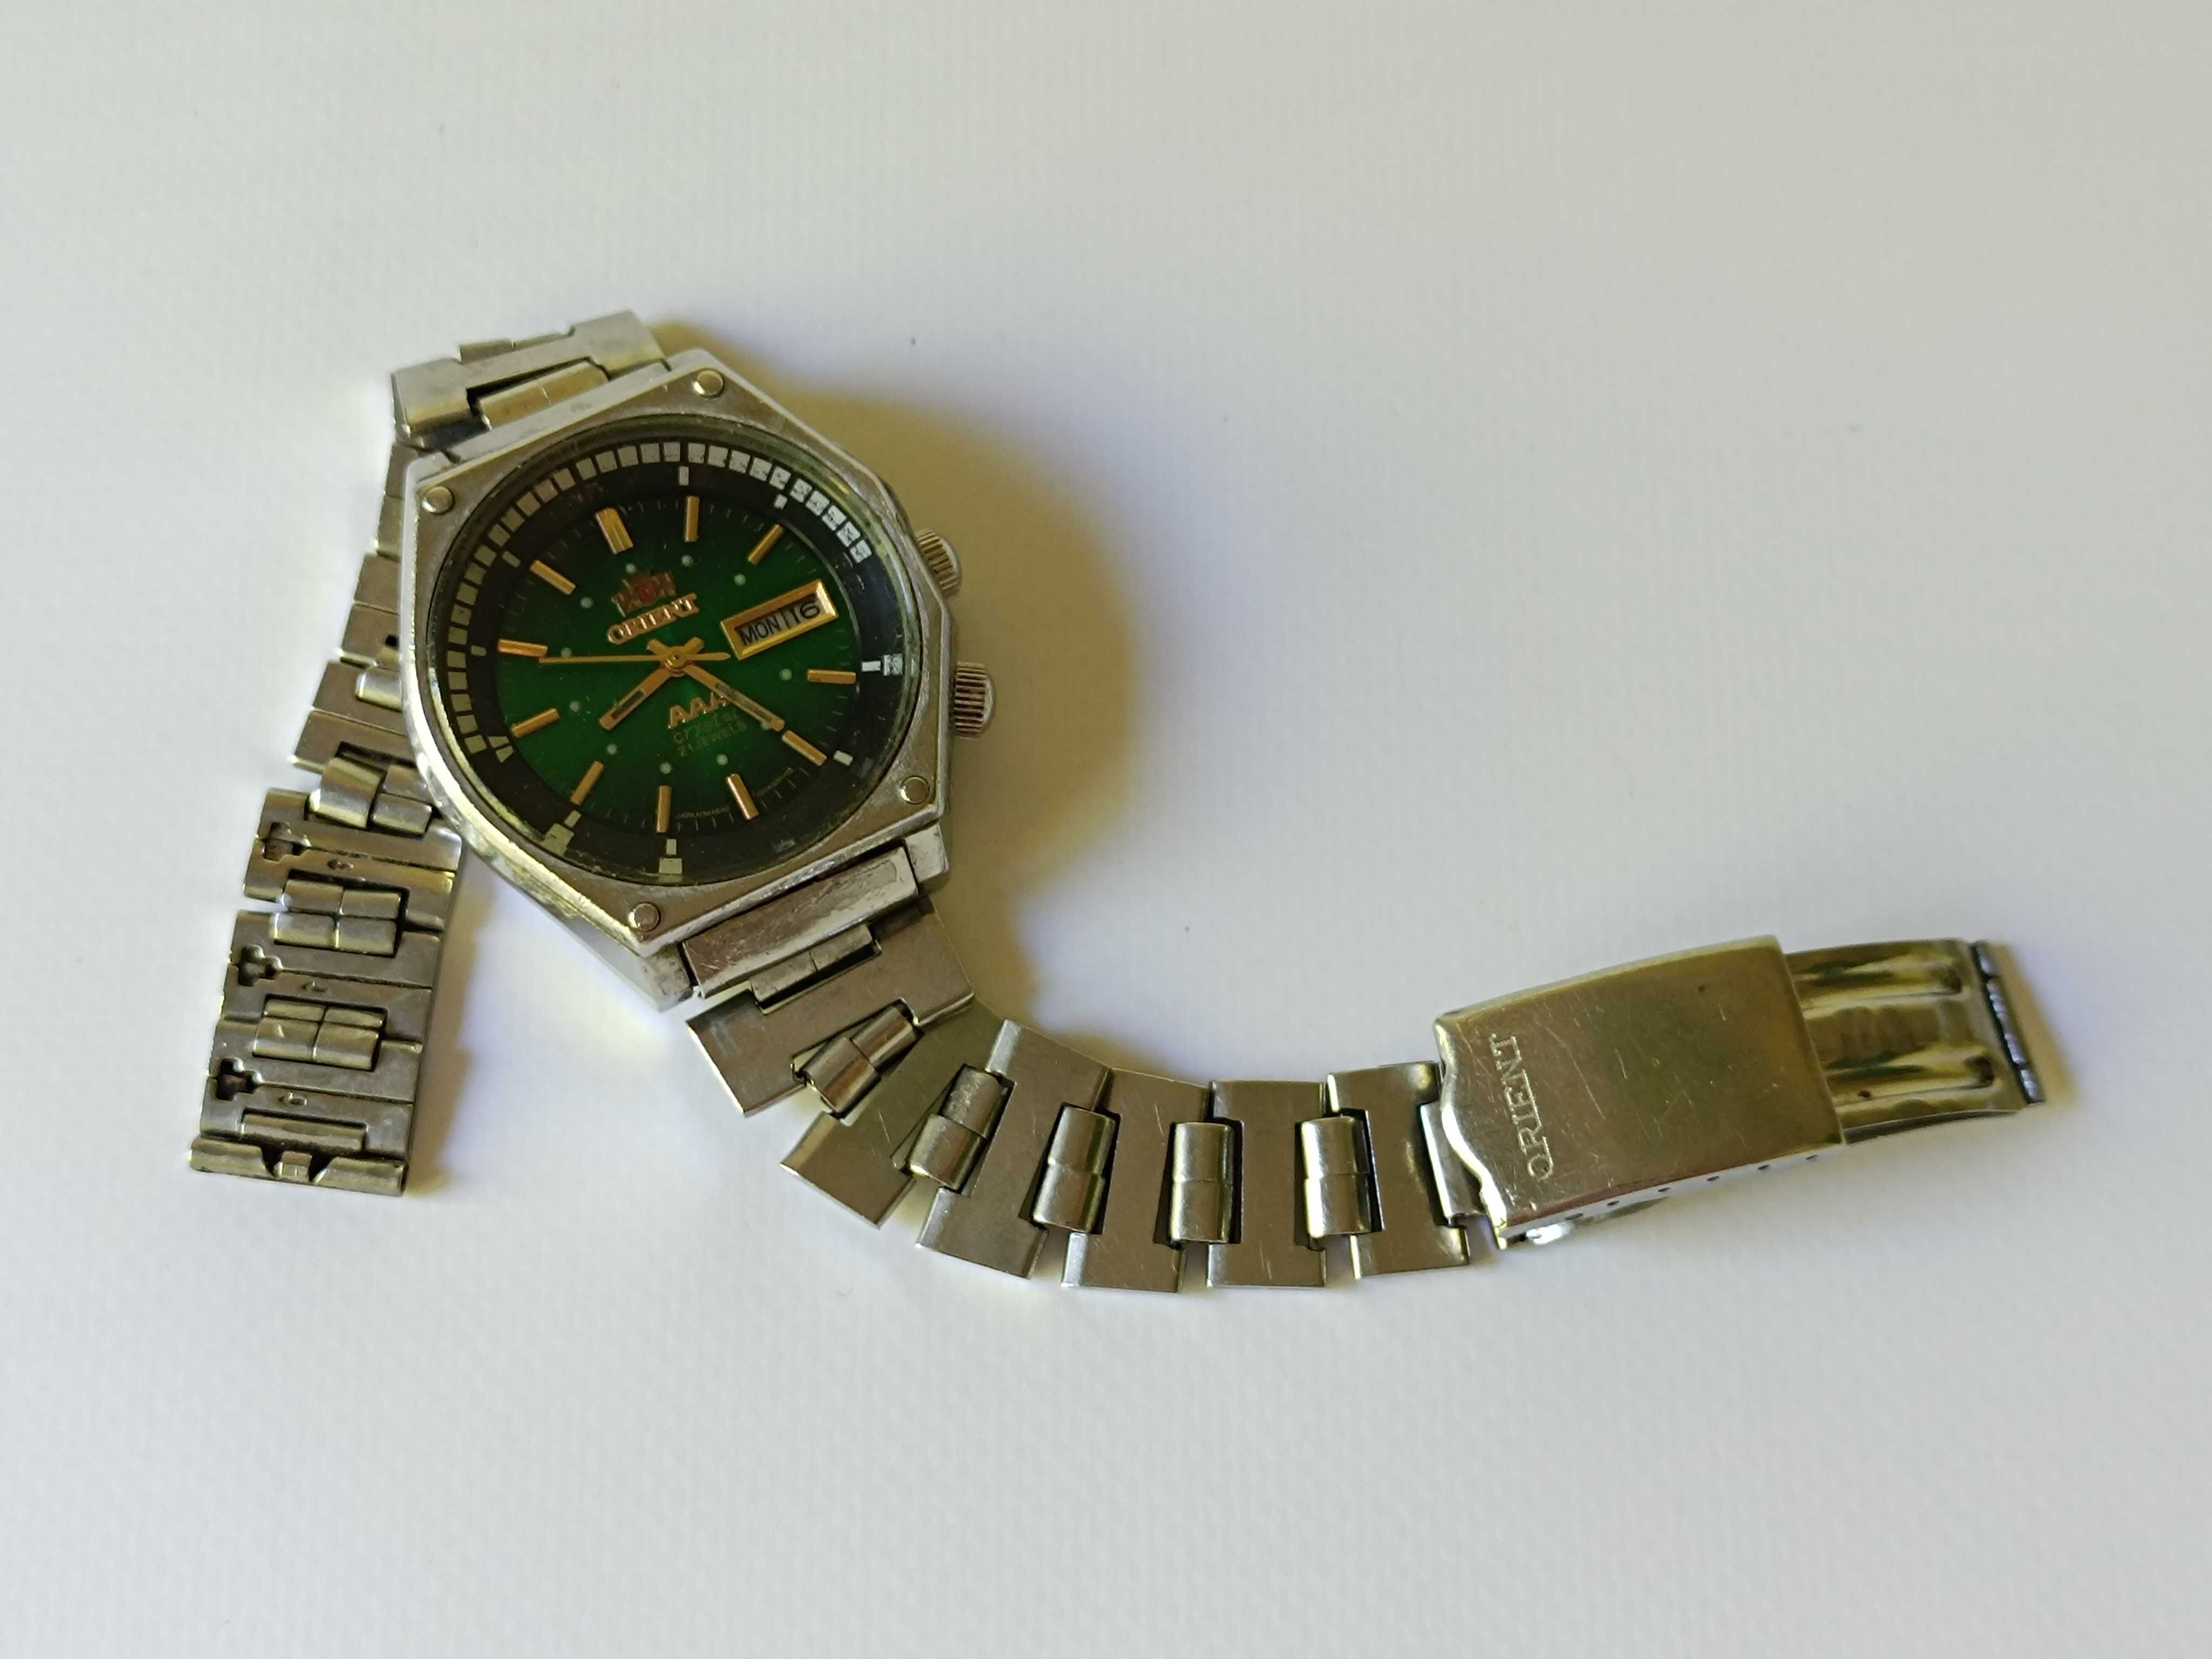 Японские винтажные наручные часы Orient AAA Sea King Diver 21 Jewels